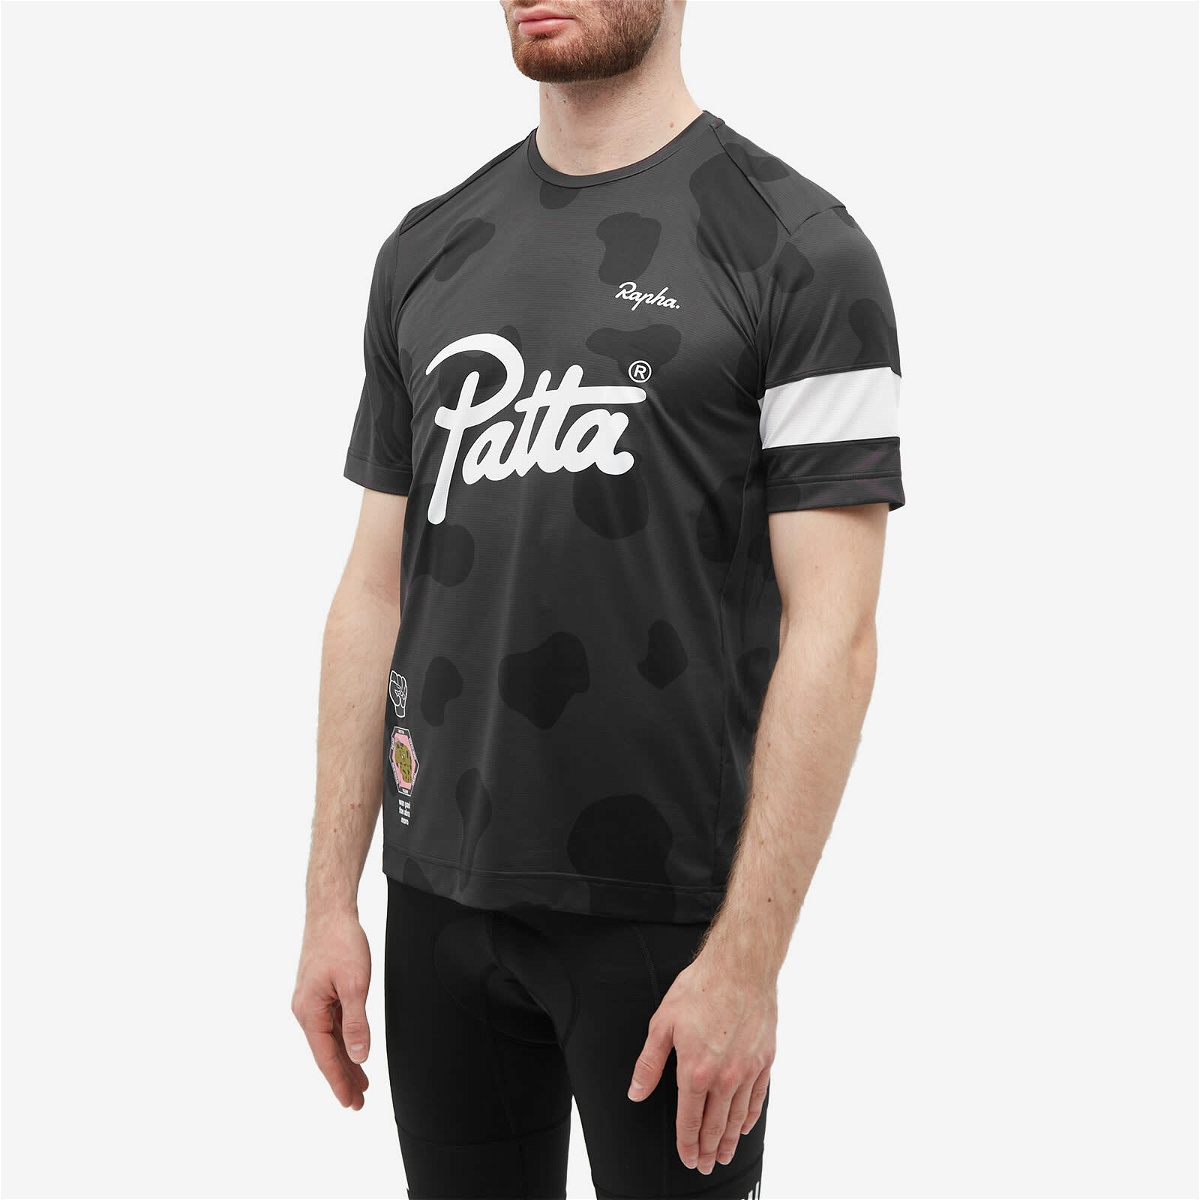 Rapha x Patta Trail Technical T-Shirt in Black